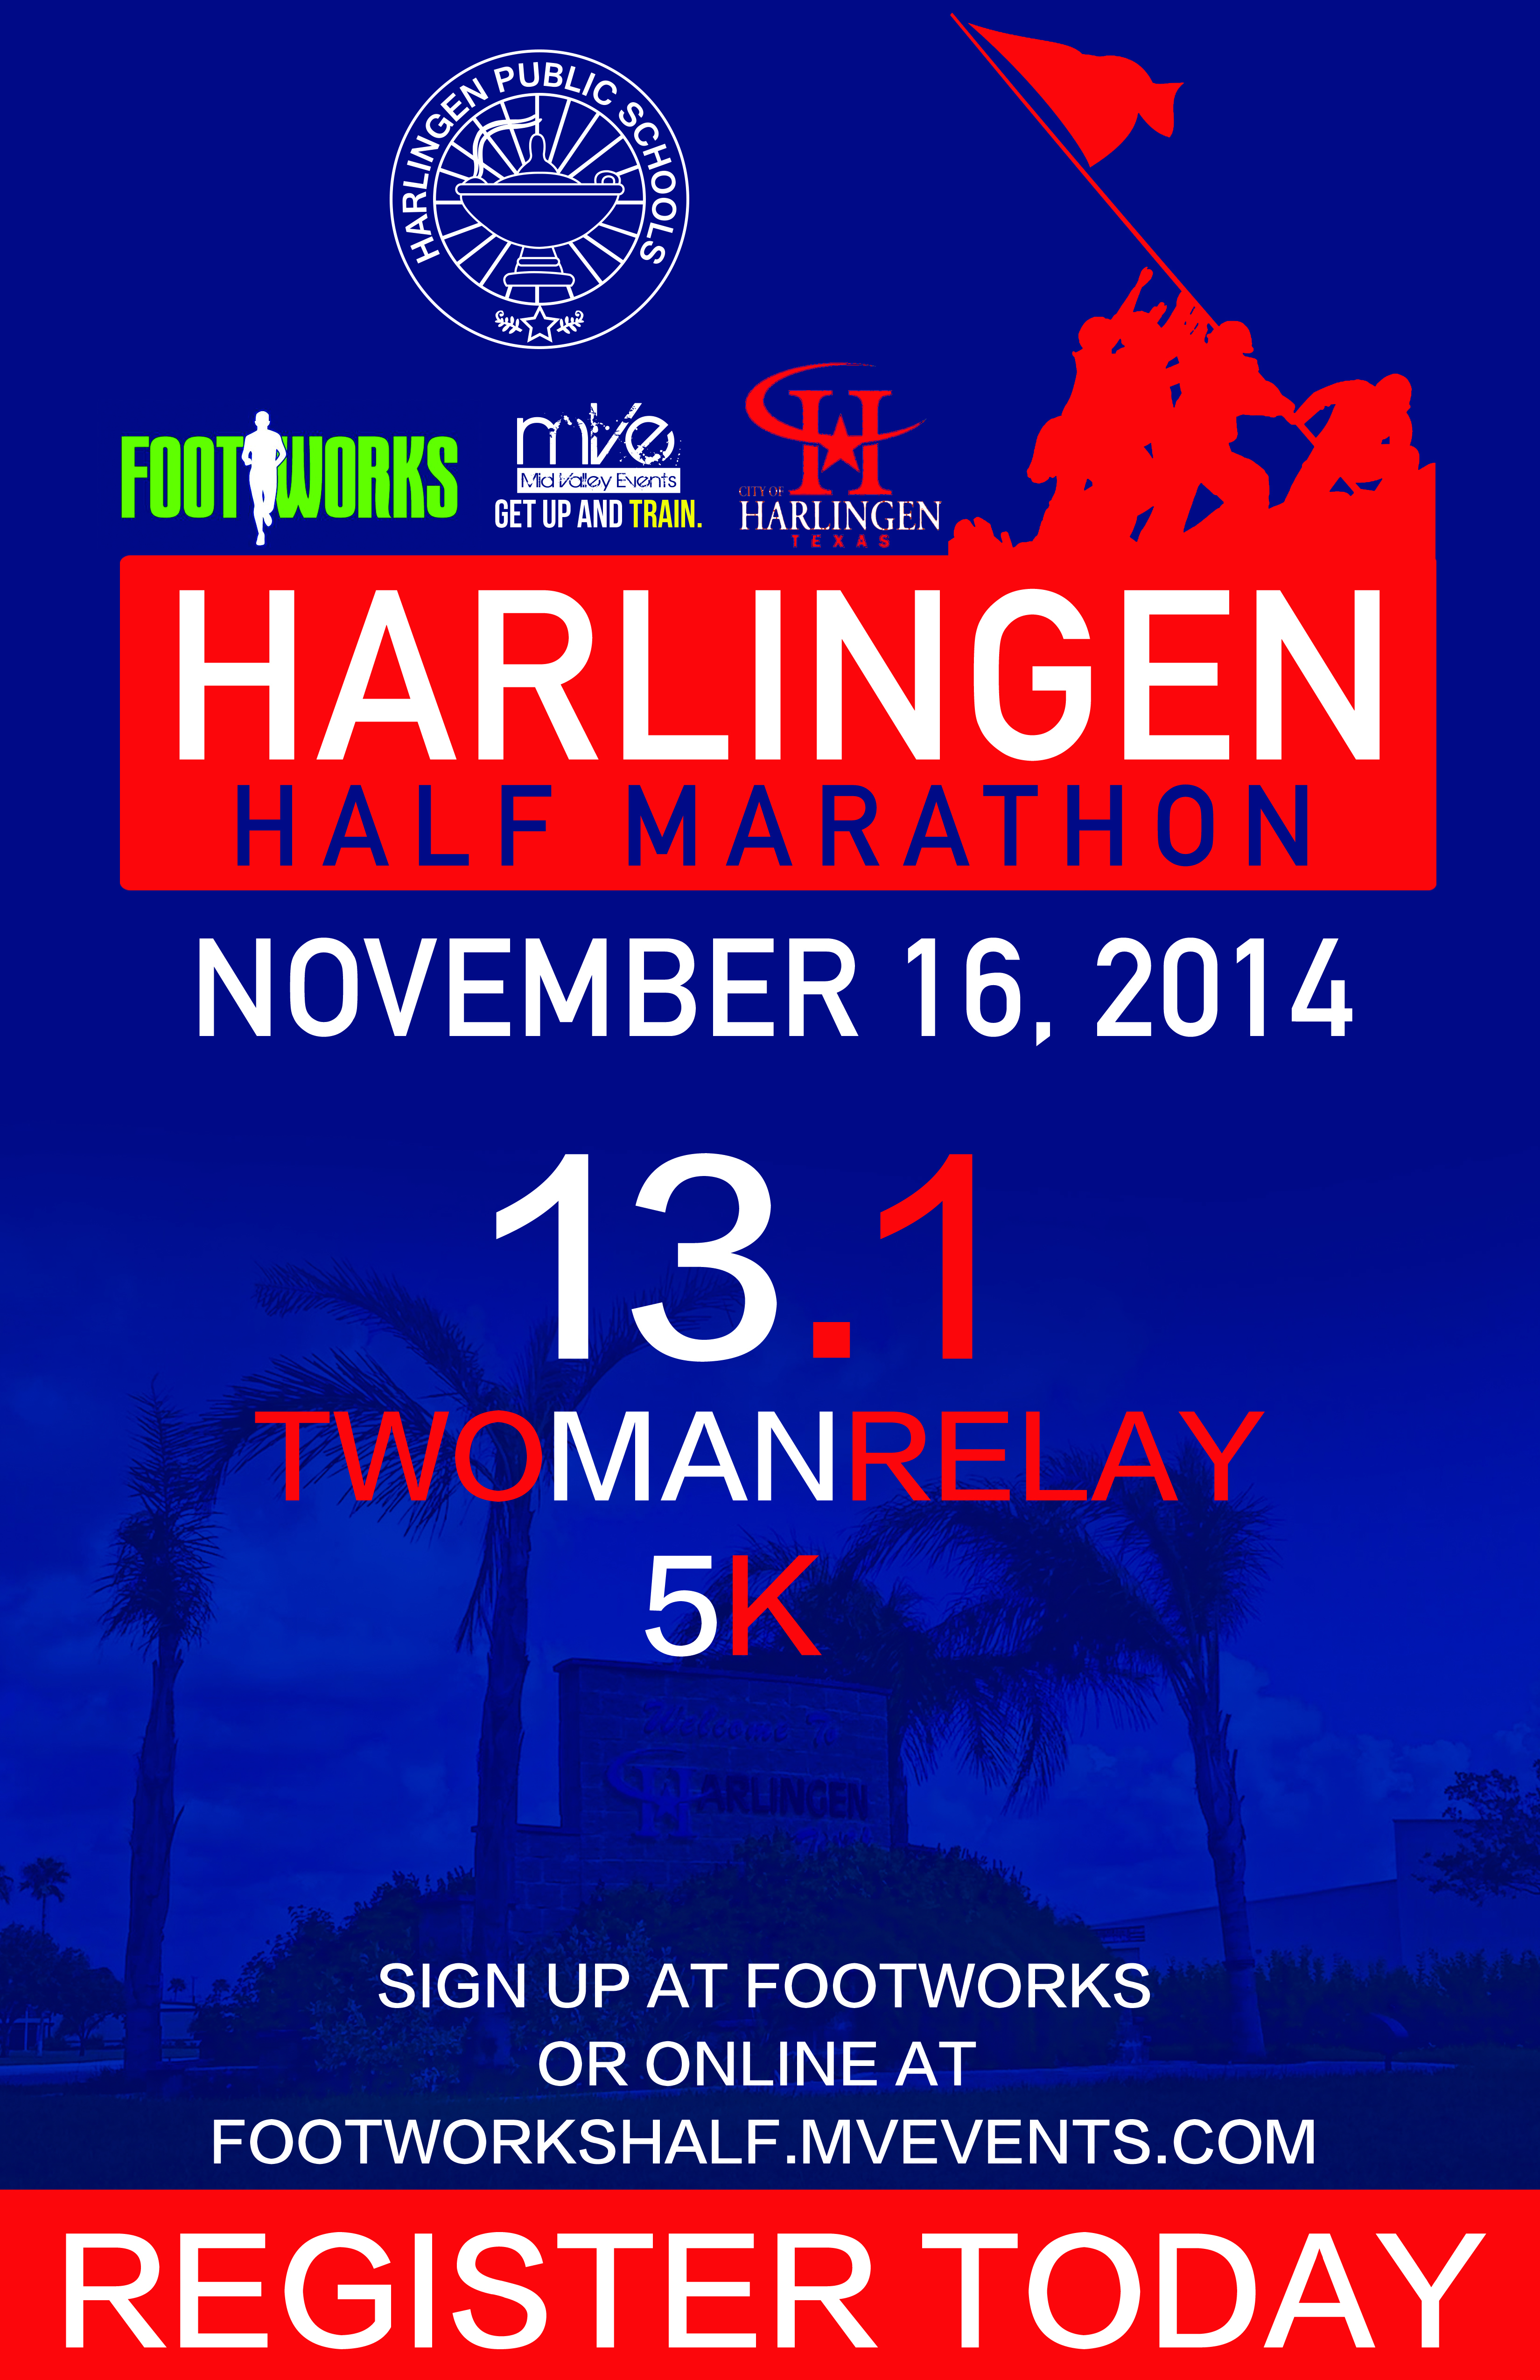 HCISD proudly supports the Harlingen Half Marathon